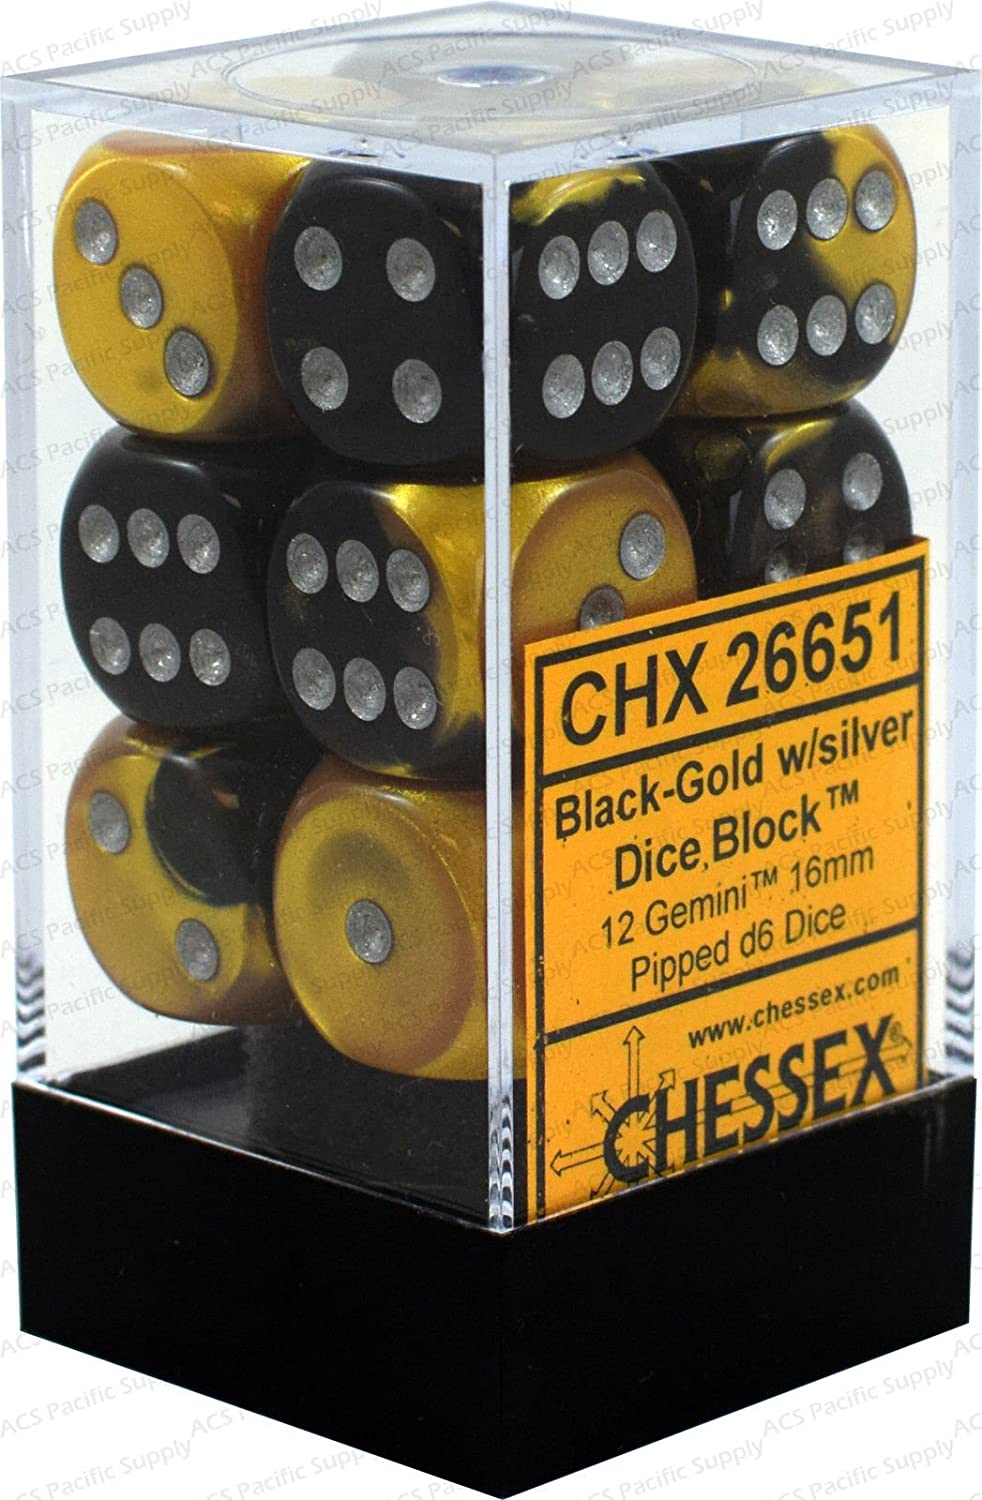 Chessex Dice: D6 Block 16mm - Gemini - Black-Gold with Silver (CHX 26651) - Gamescape